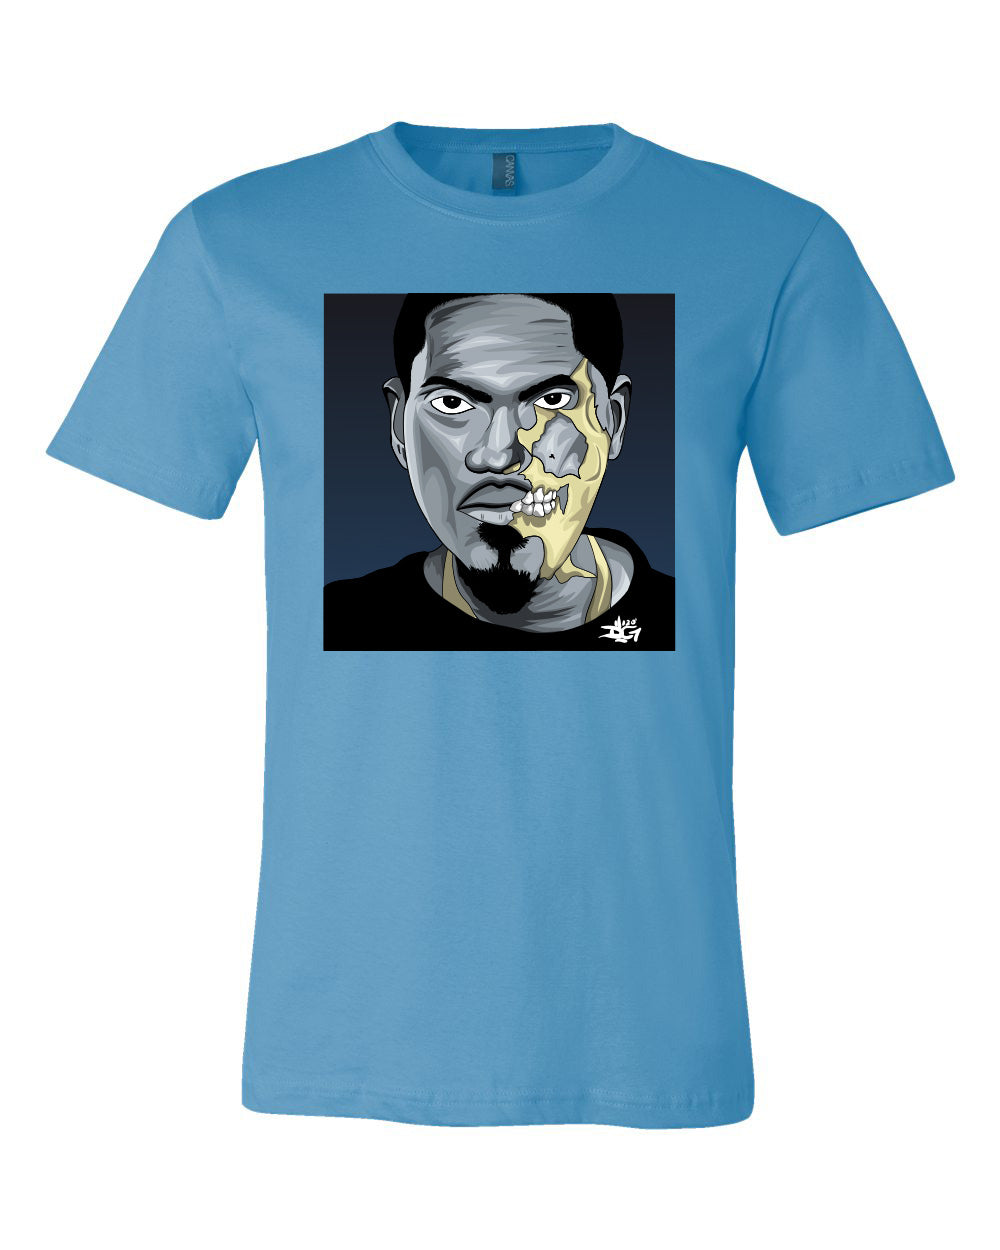 Hip Hop is DEAD Series "ETHER" Adult Uni-Sex T-shirt (Light Blue) by Diego Garcia